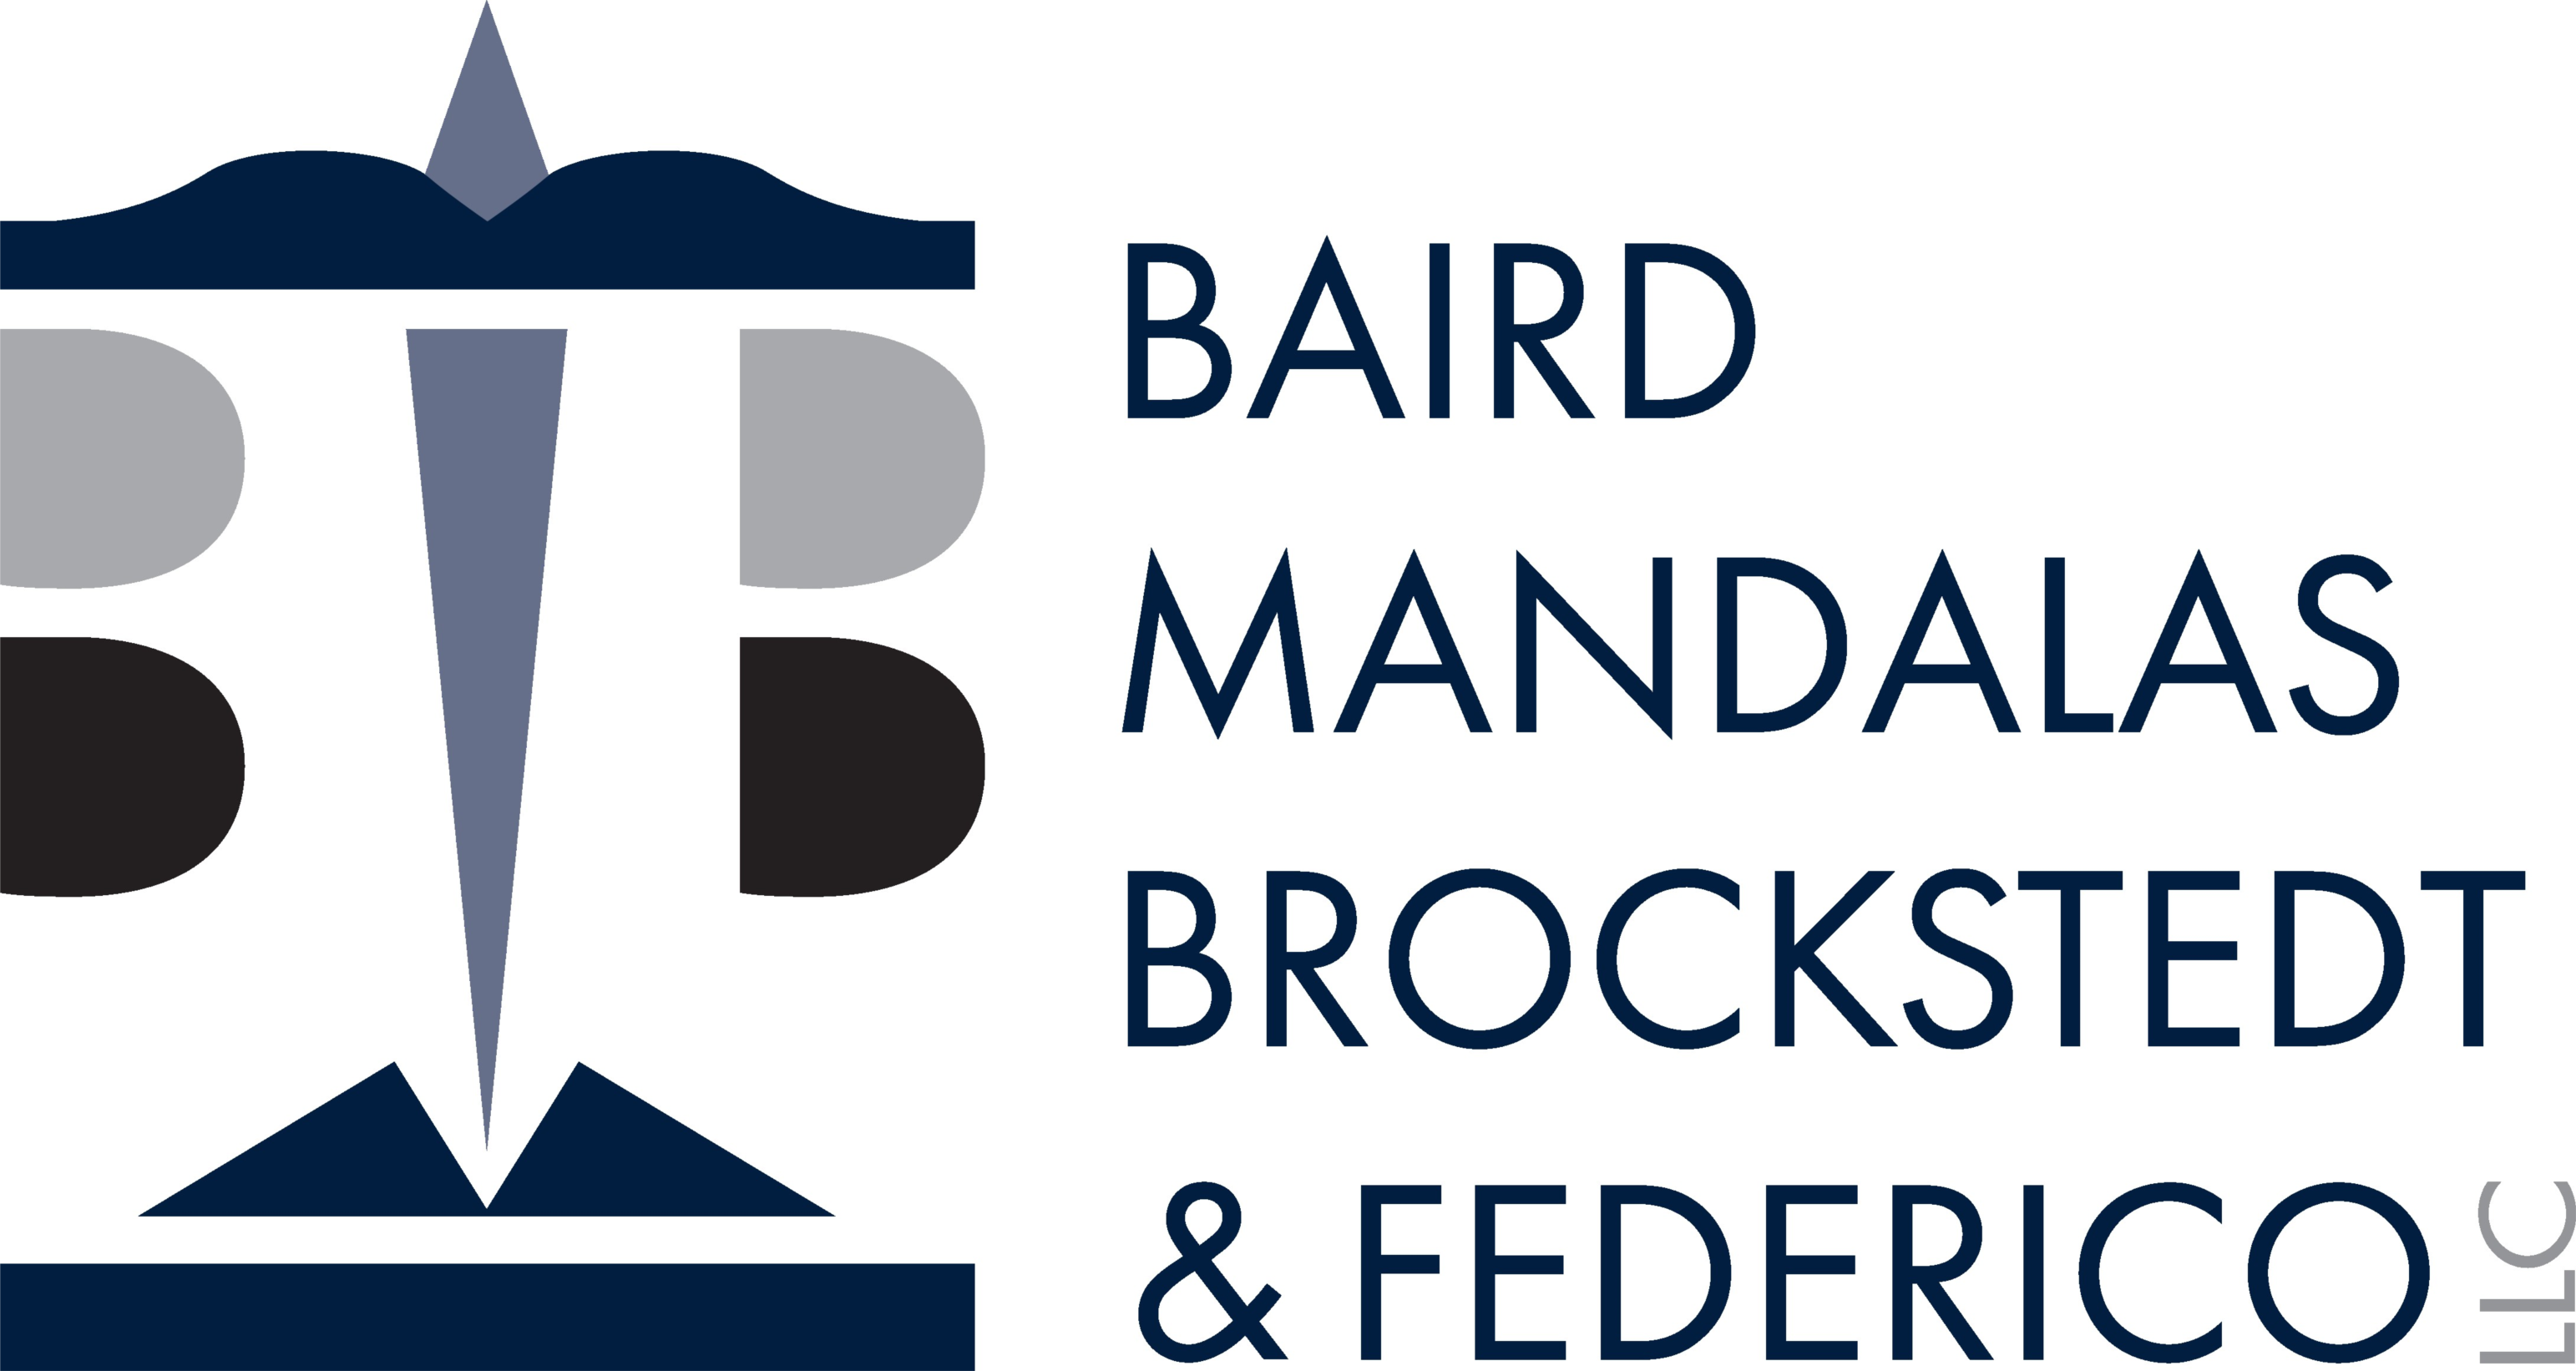 Baird Mandalas Brockstedt & Federico LLC logo